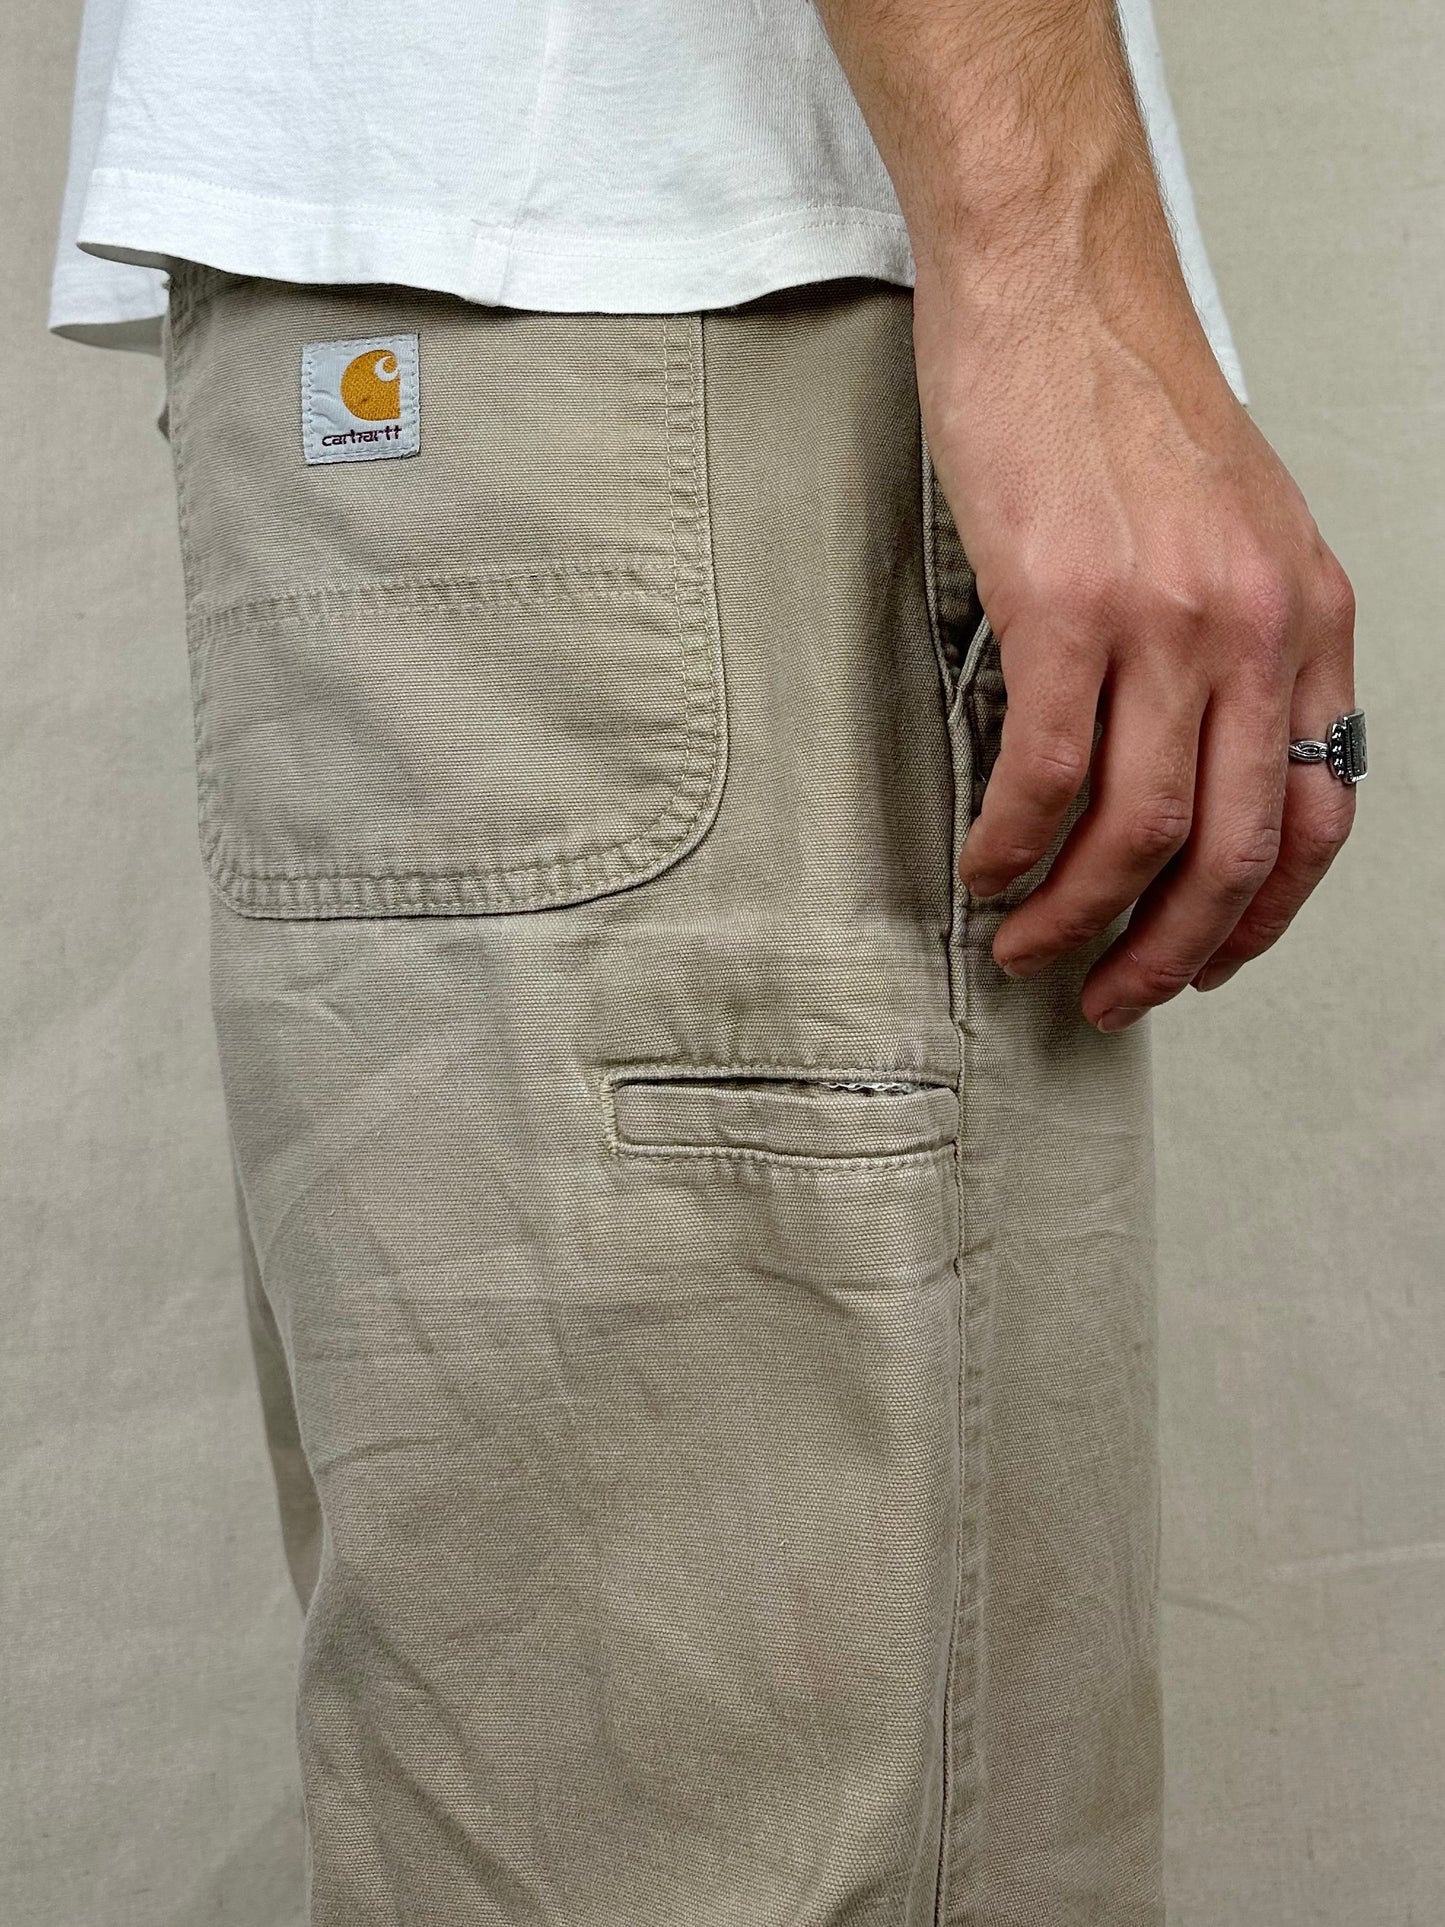 90's Carhartt Vintage Pants Size 33x31